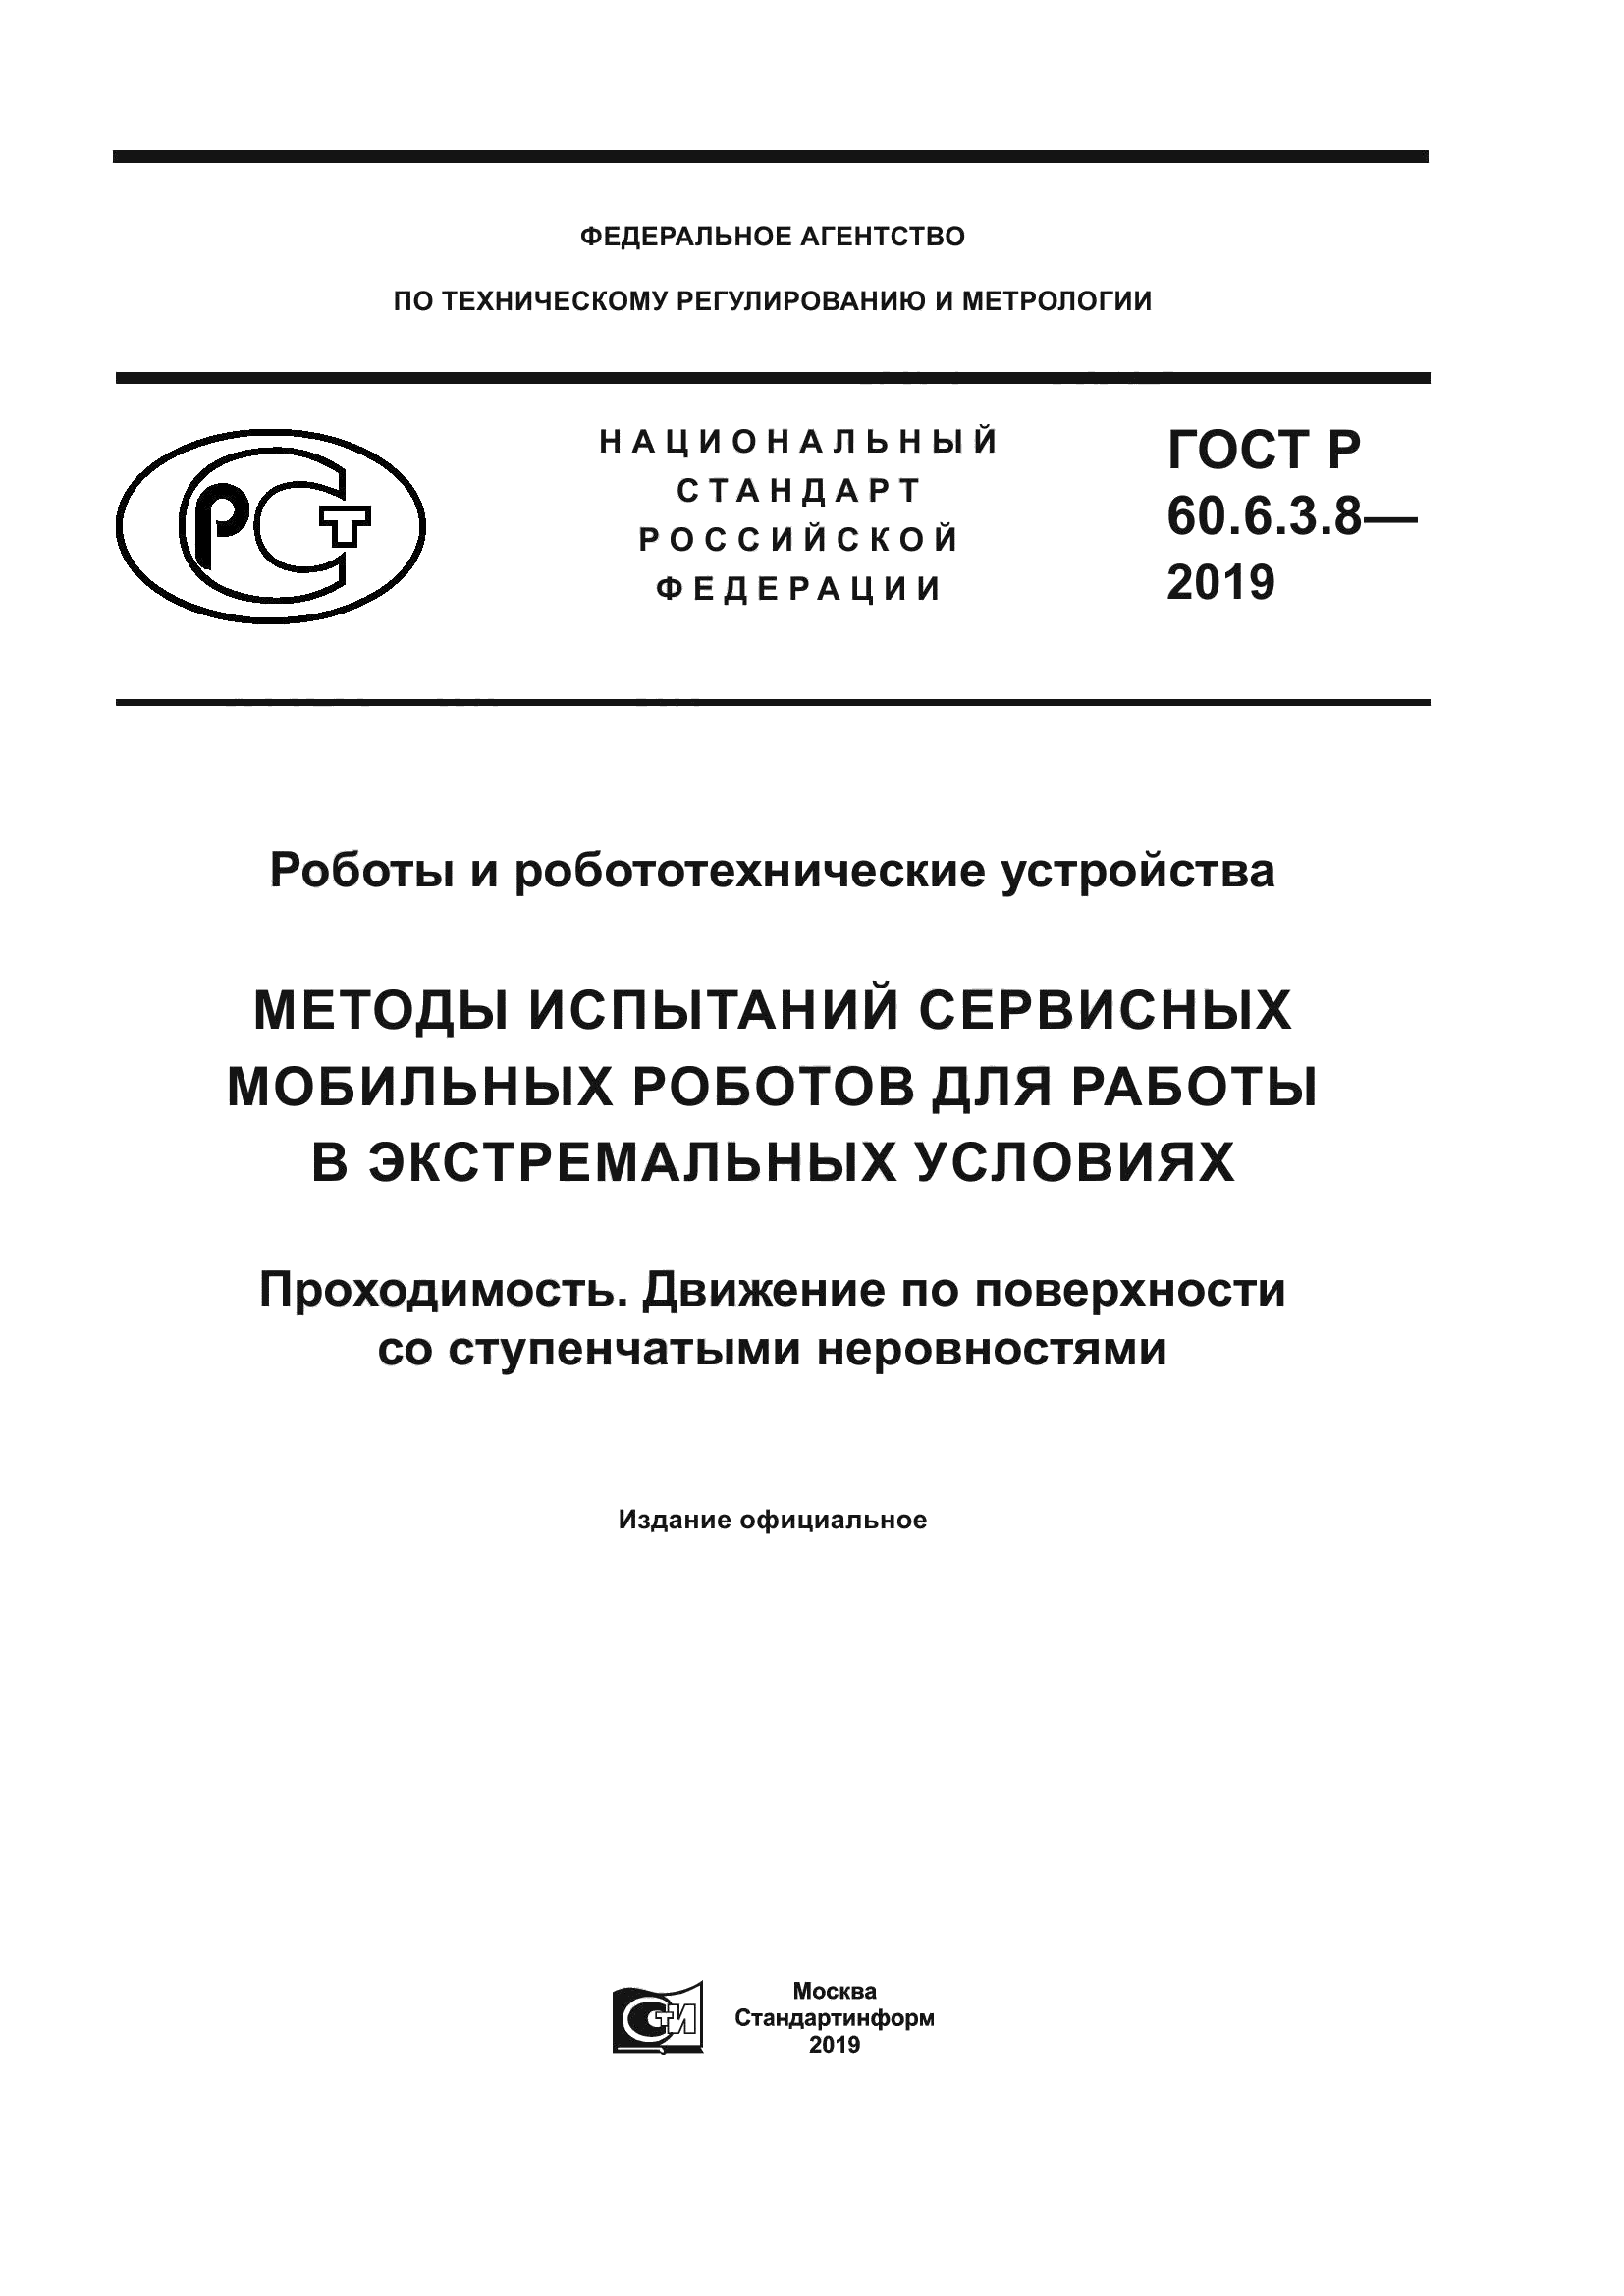 ГОСТ Р 60.6.3.8-2019